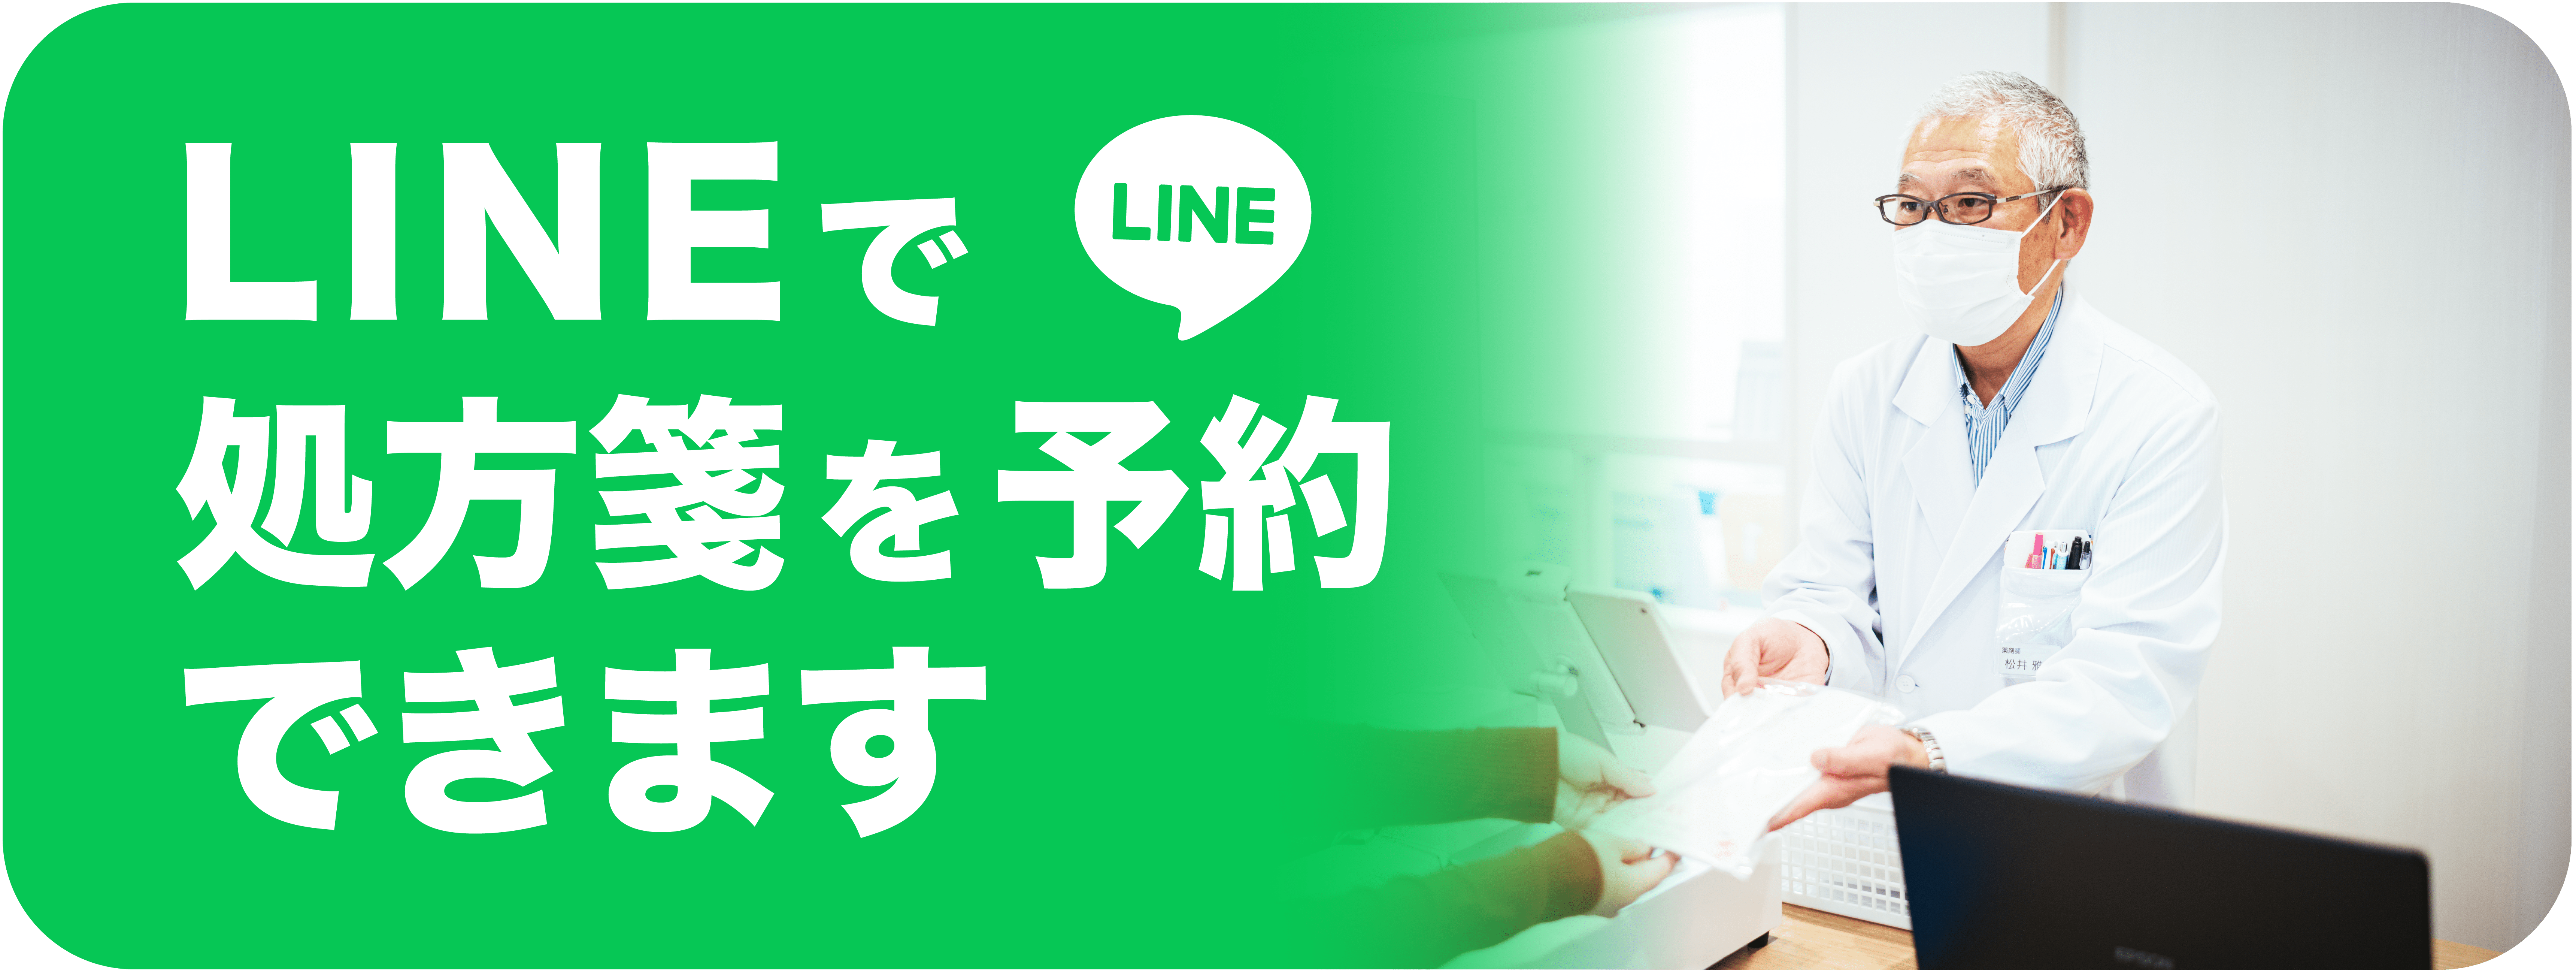 line-banner